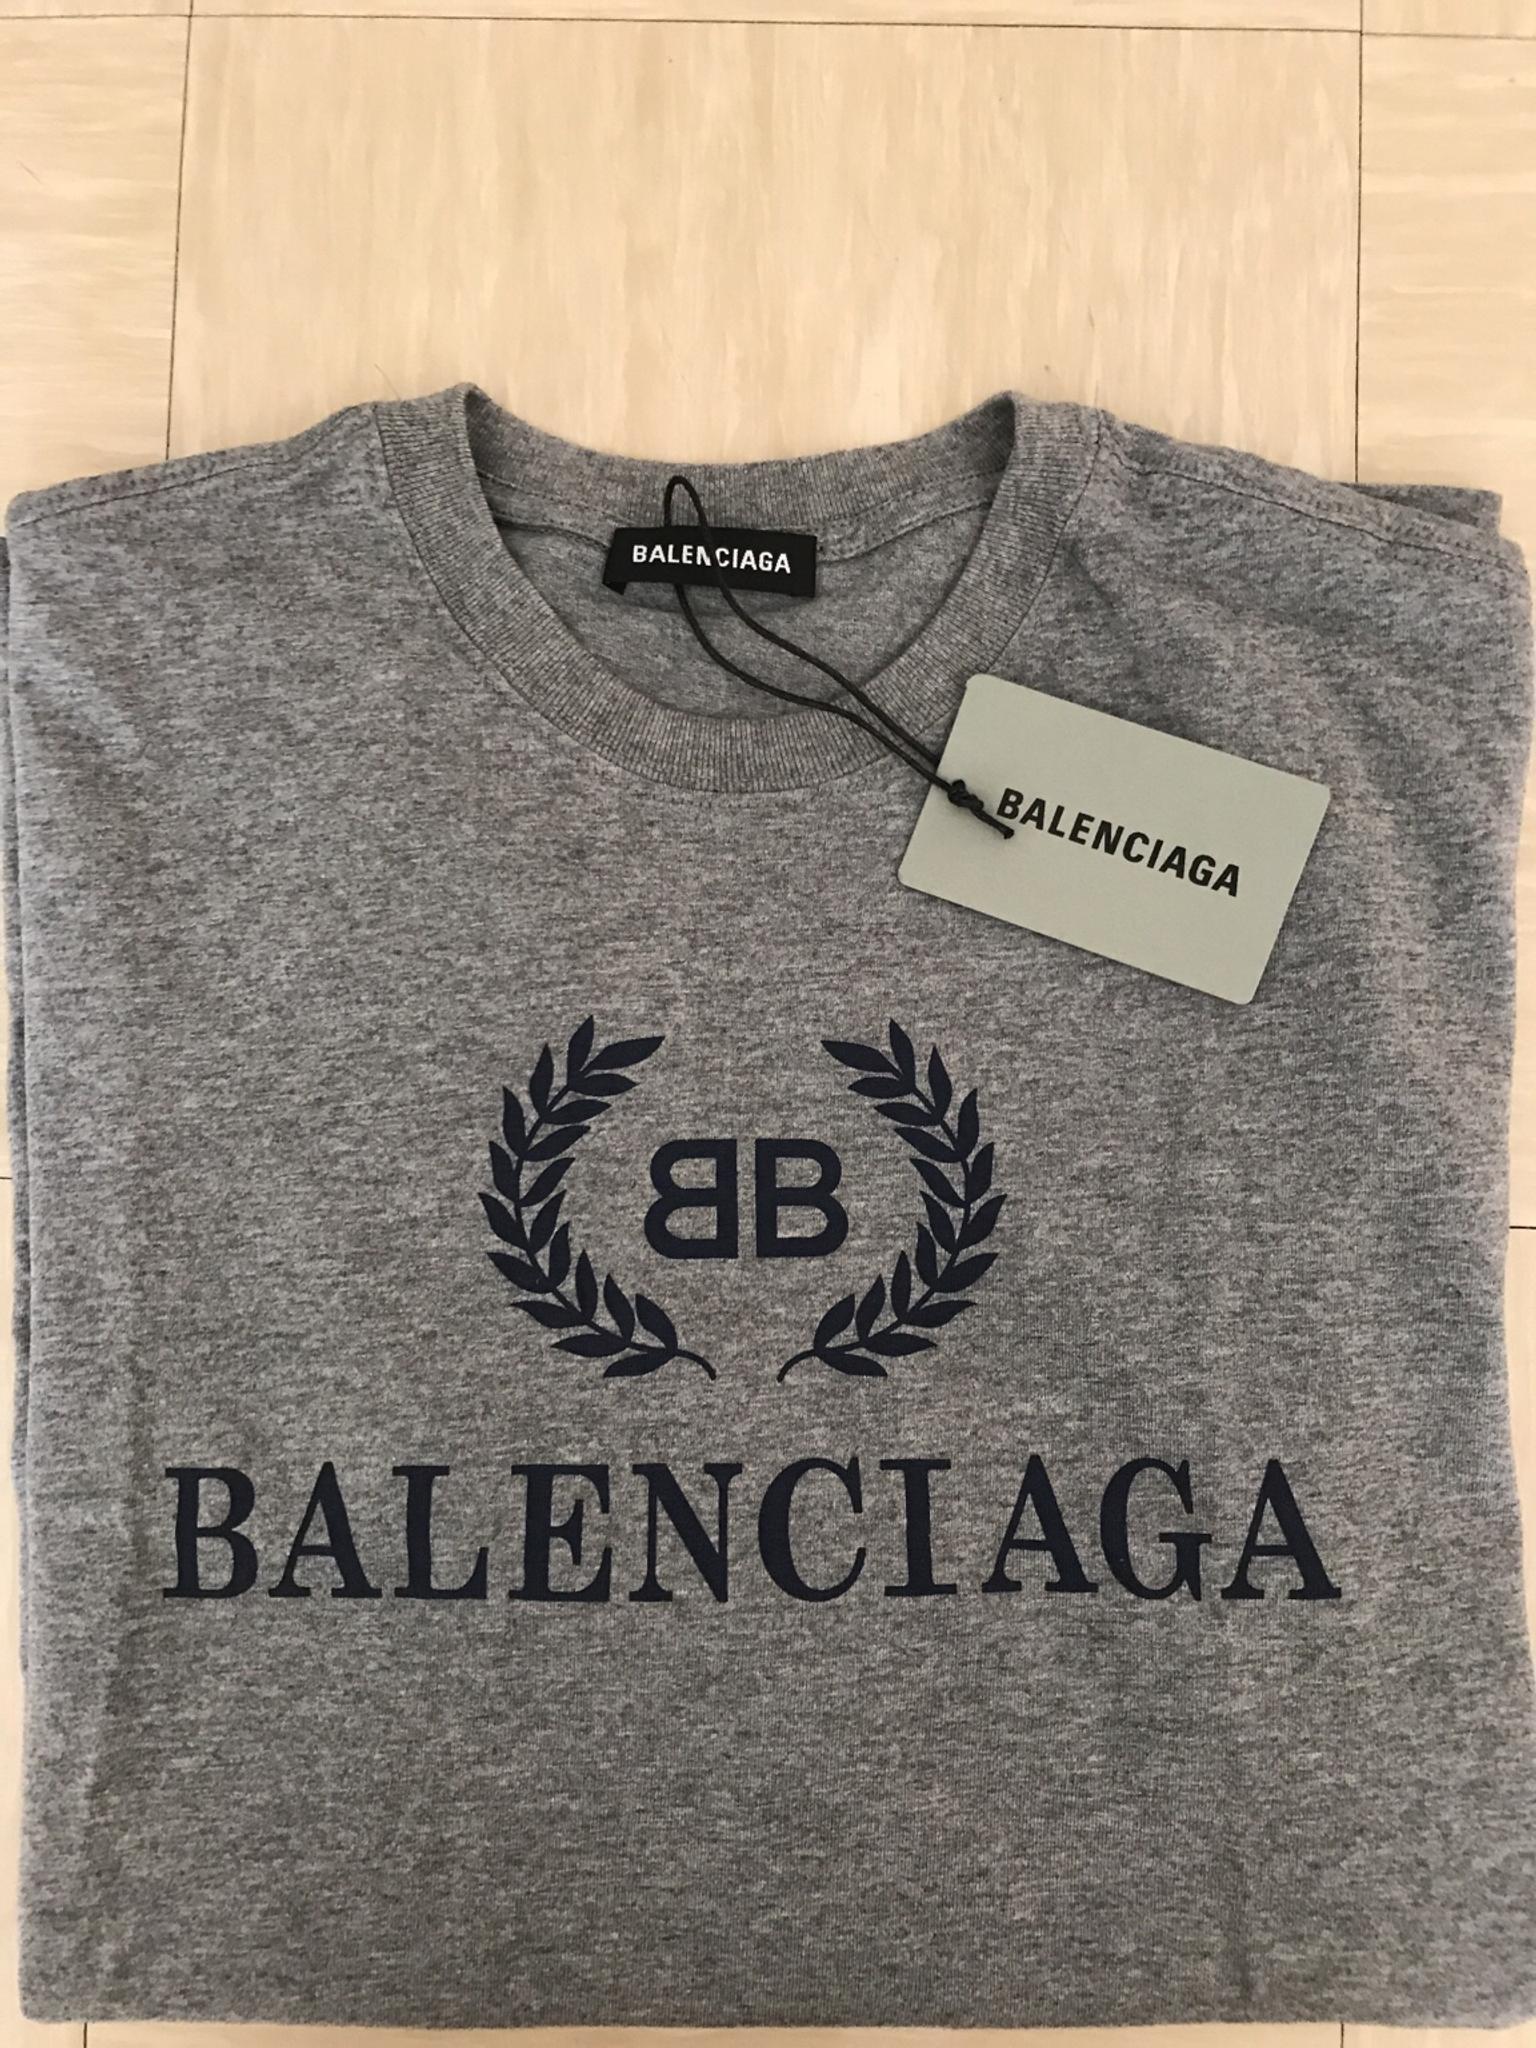 Balenciaga replica t shirt in N19 